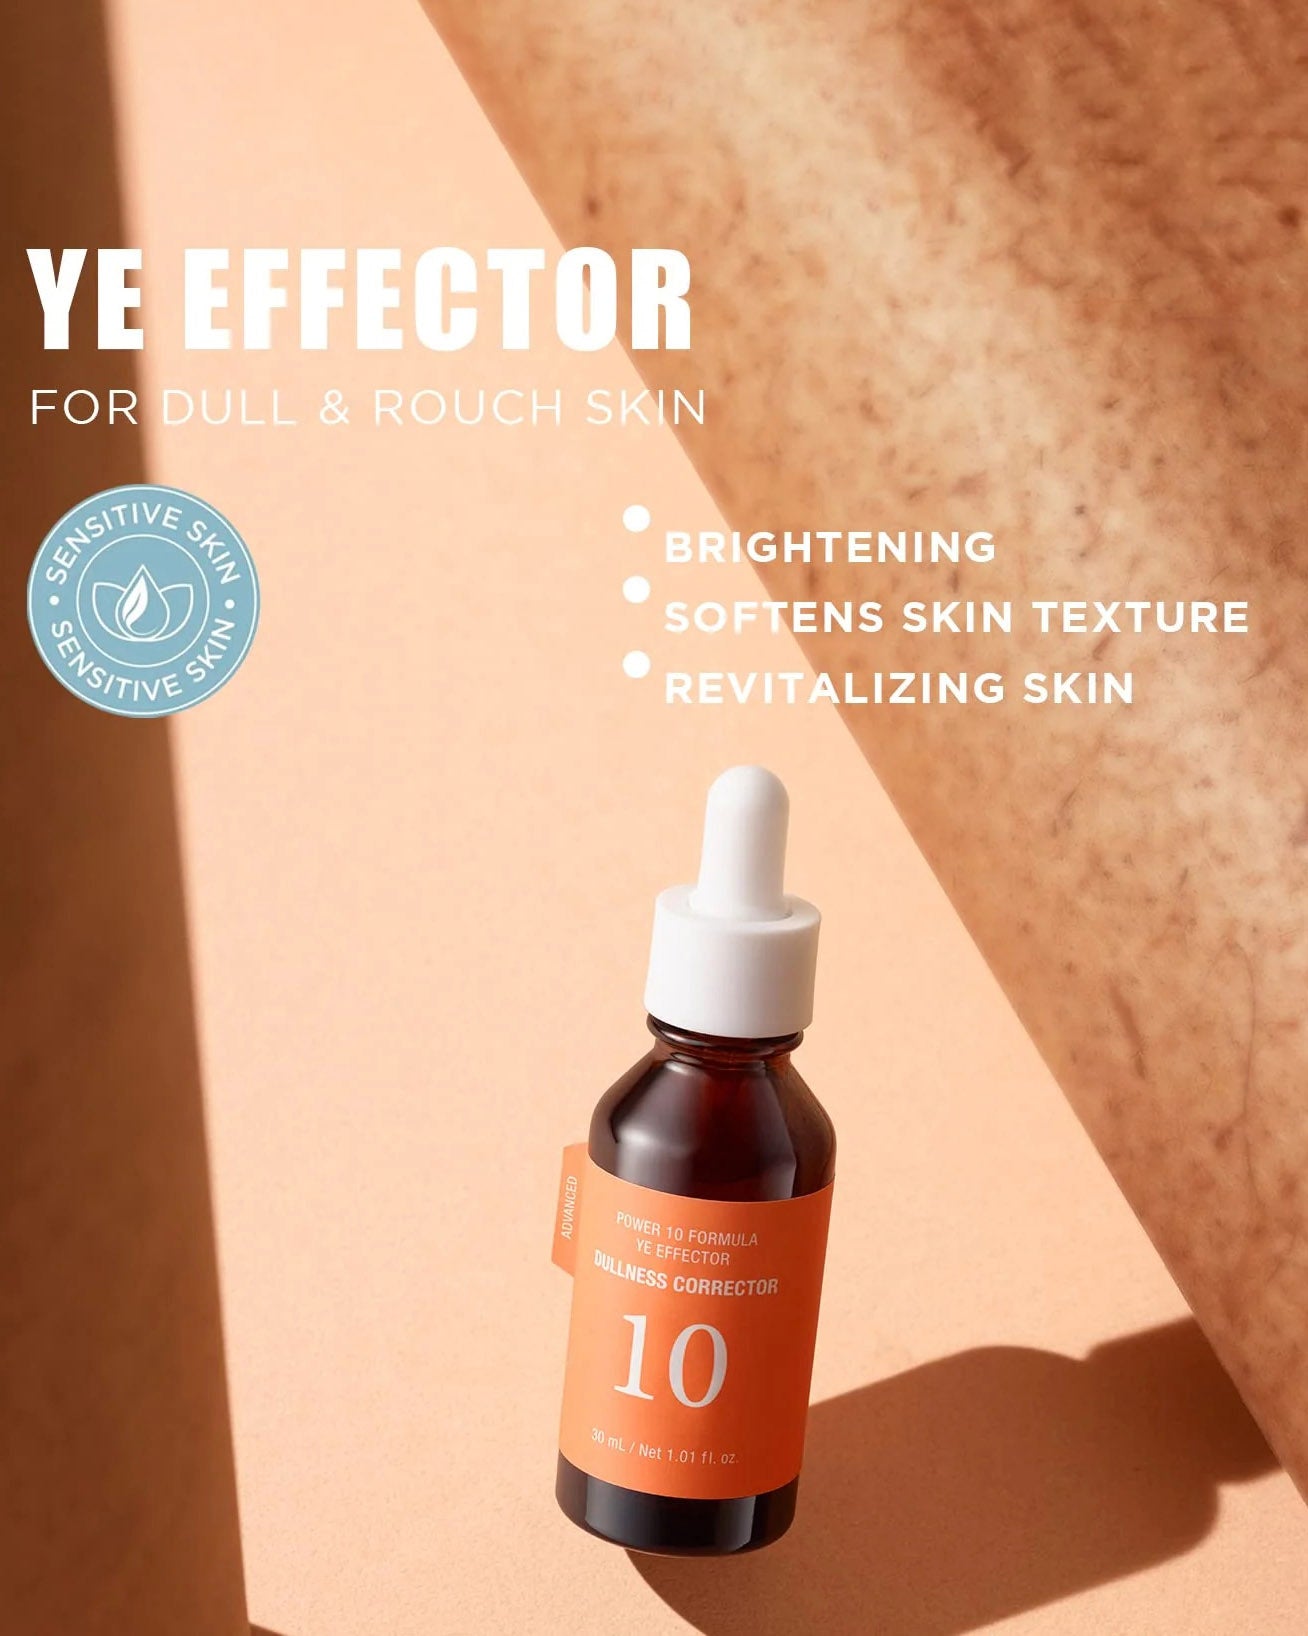 It's Skin Power 10 Formula YE Effector AD Dullness Corrector